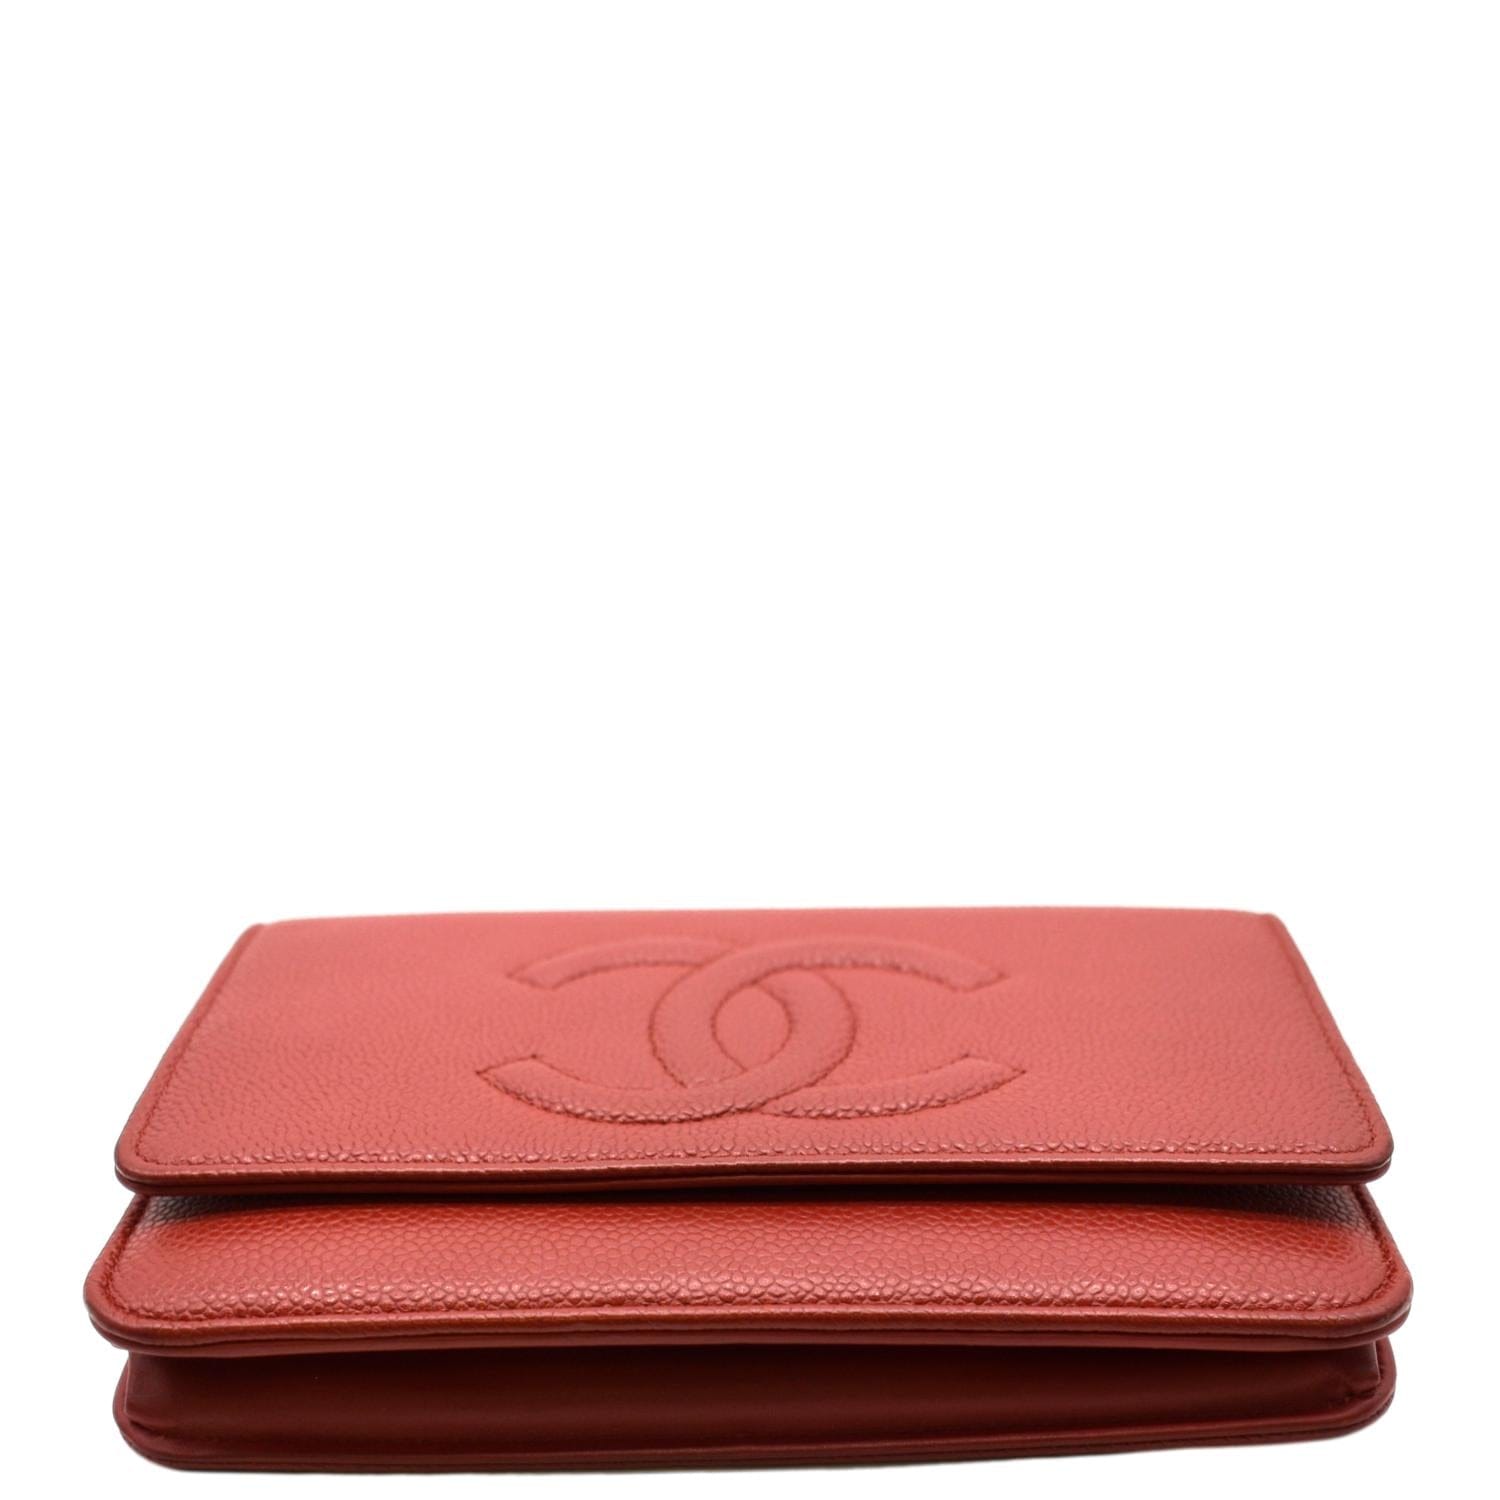 wallet on chain chanel red handbag